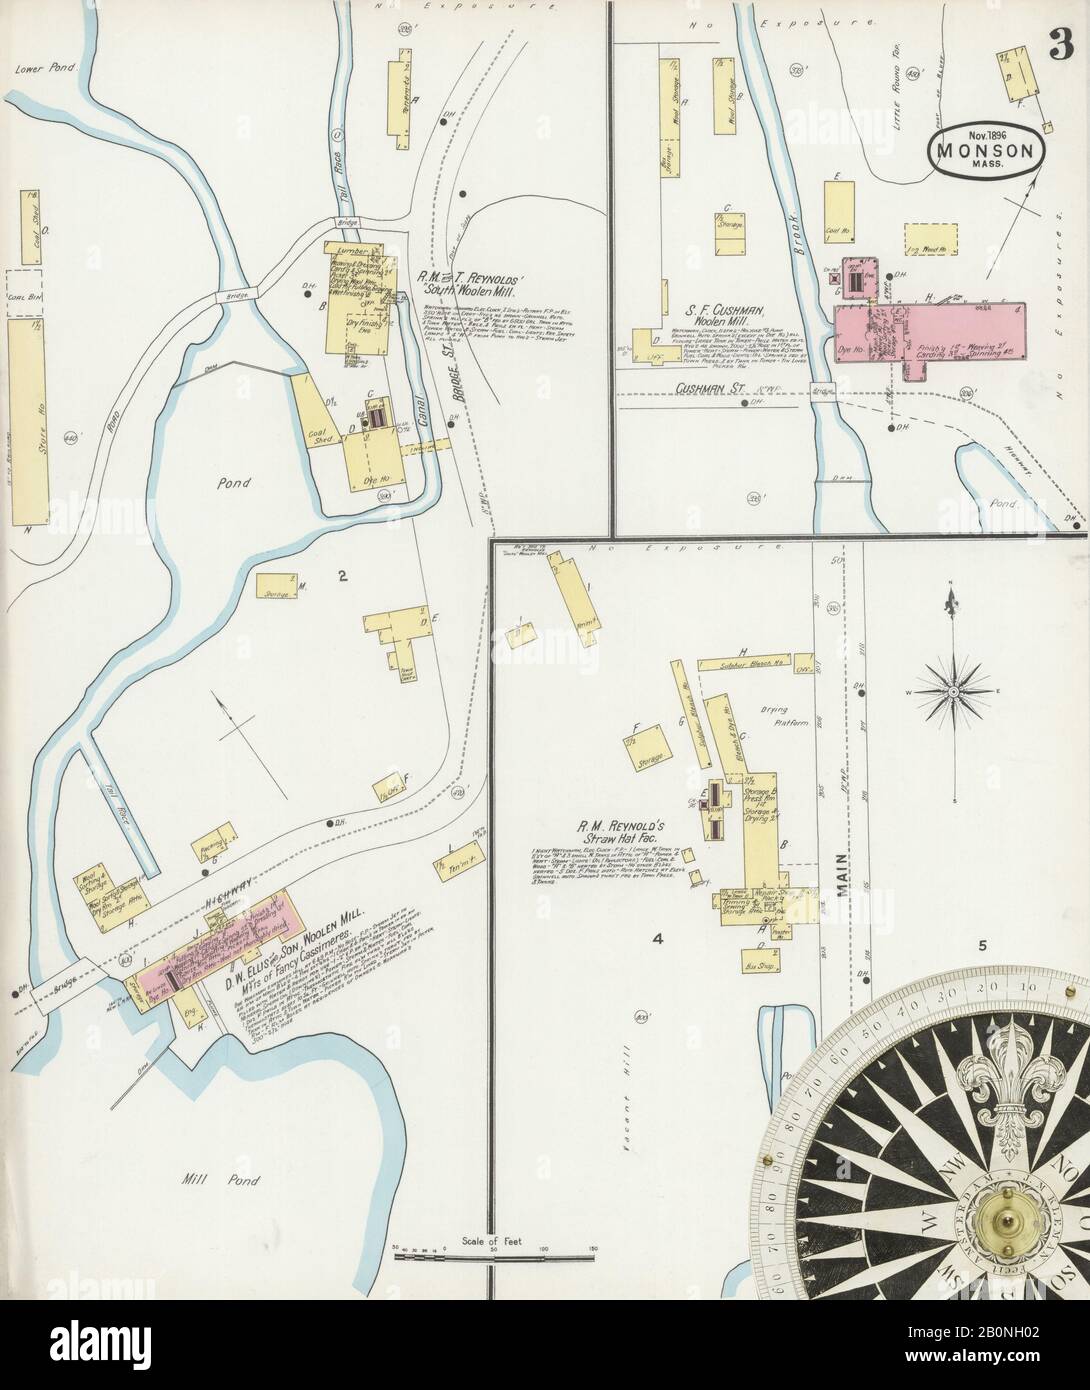 Bild 3 von Sanborn Fire Insurance Map aus Monson, Hampden County, Massachusetts. Nov. 4 Blatt(e), Amerika, Straßenkarte mit einem Kompass Aus Dem 19. Jahrhundert Stockfoto